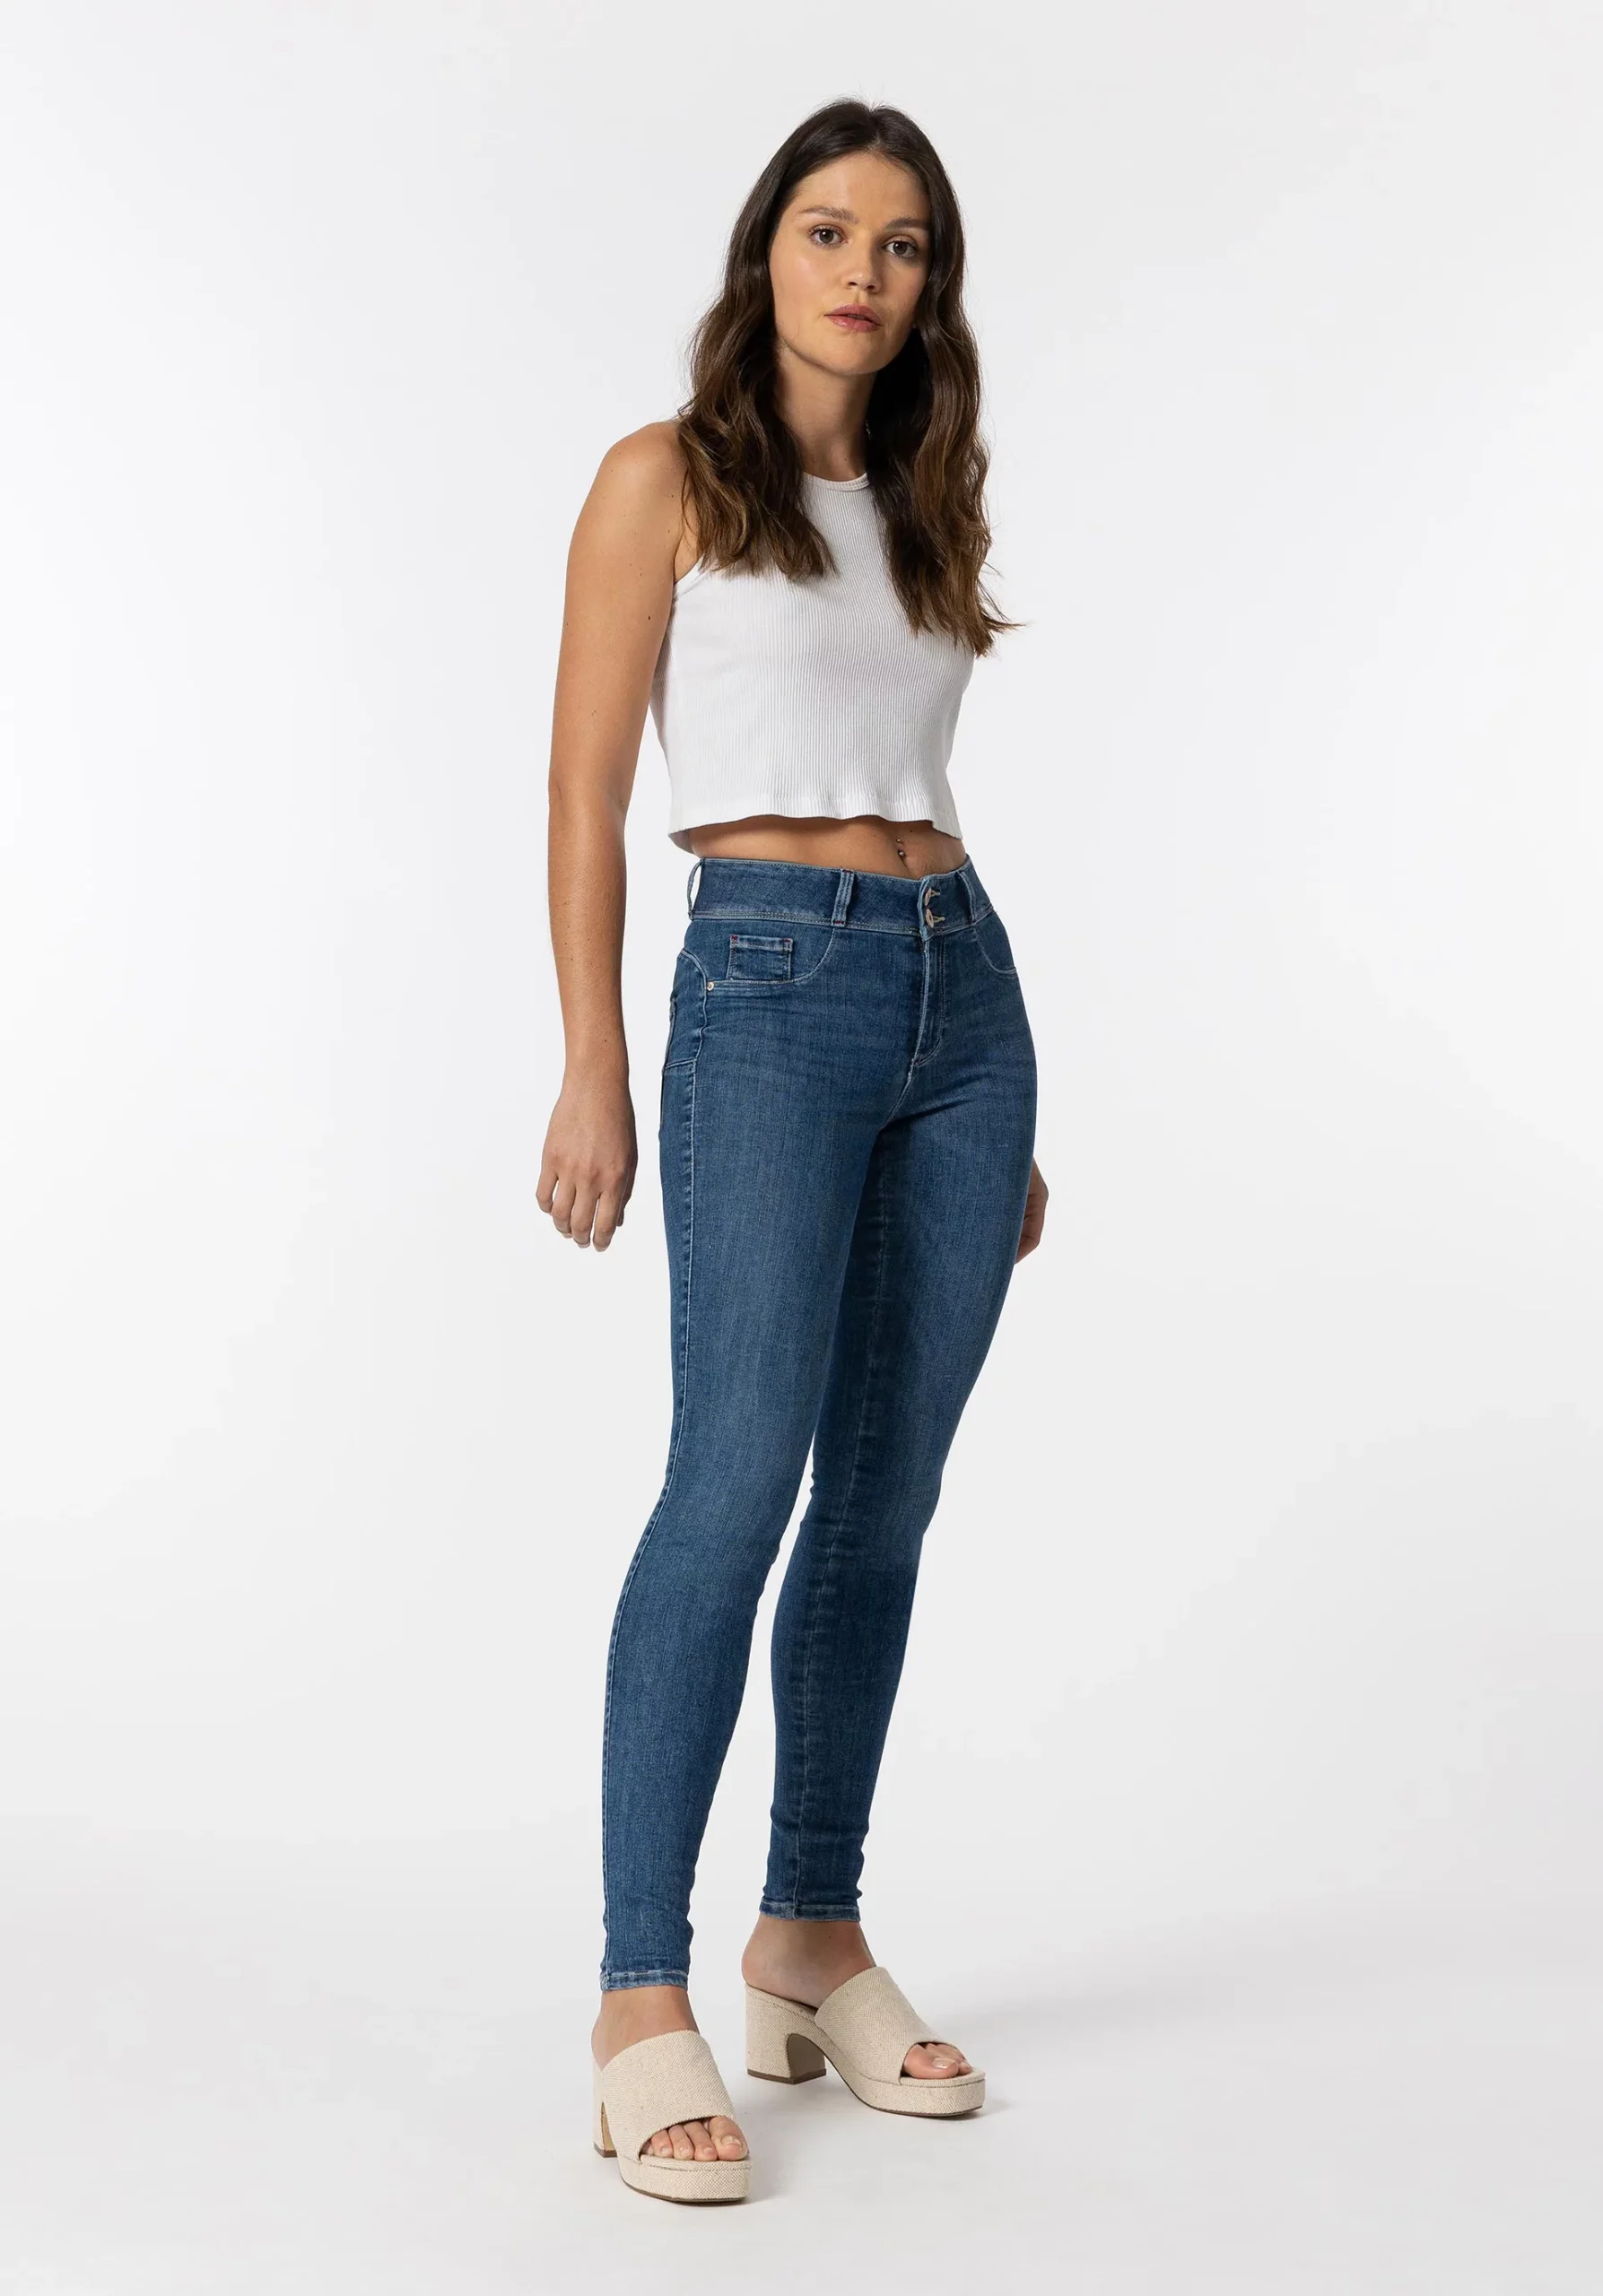 Jeans One Size Skinny Silhouette Tiro Alto 2 C